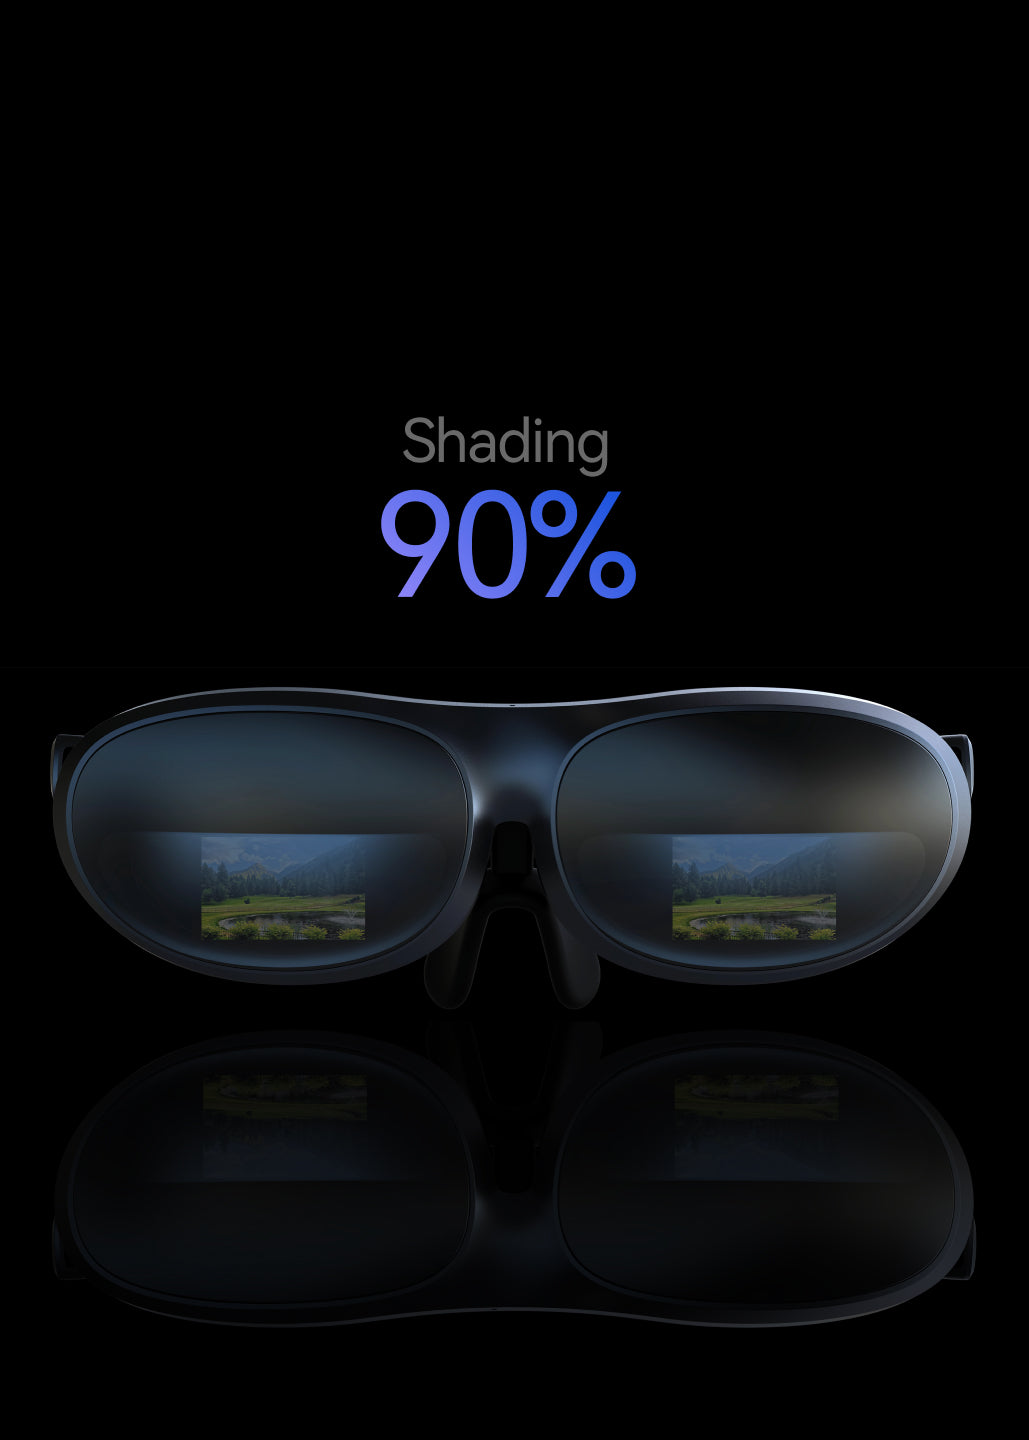 Rokid Max smart glasses reduce forward light leakage by 90%